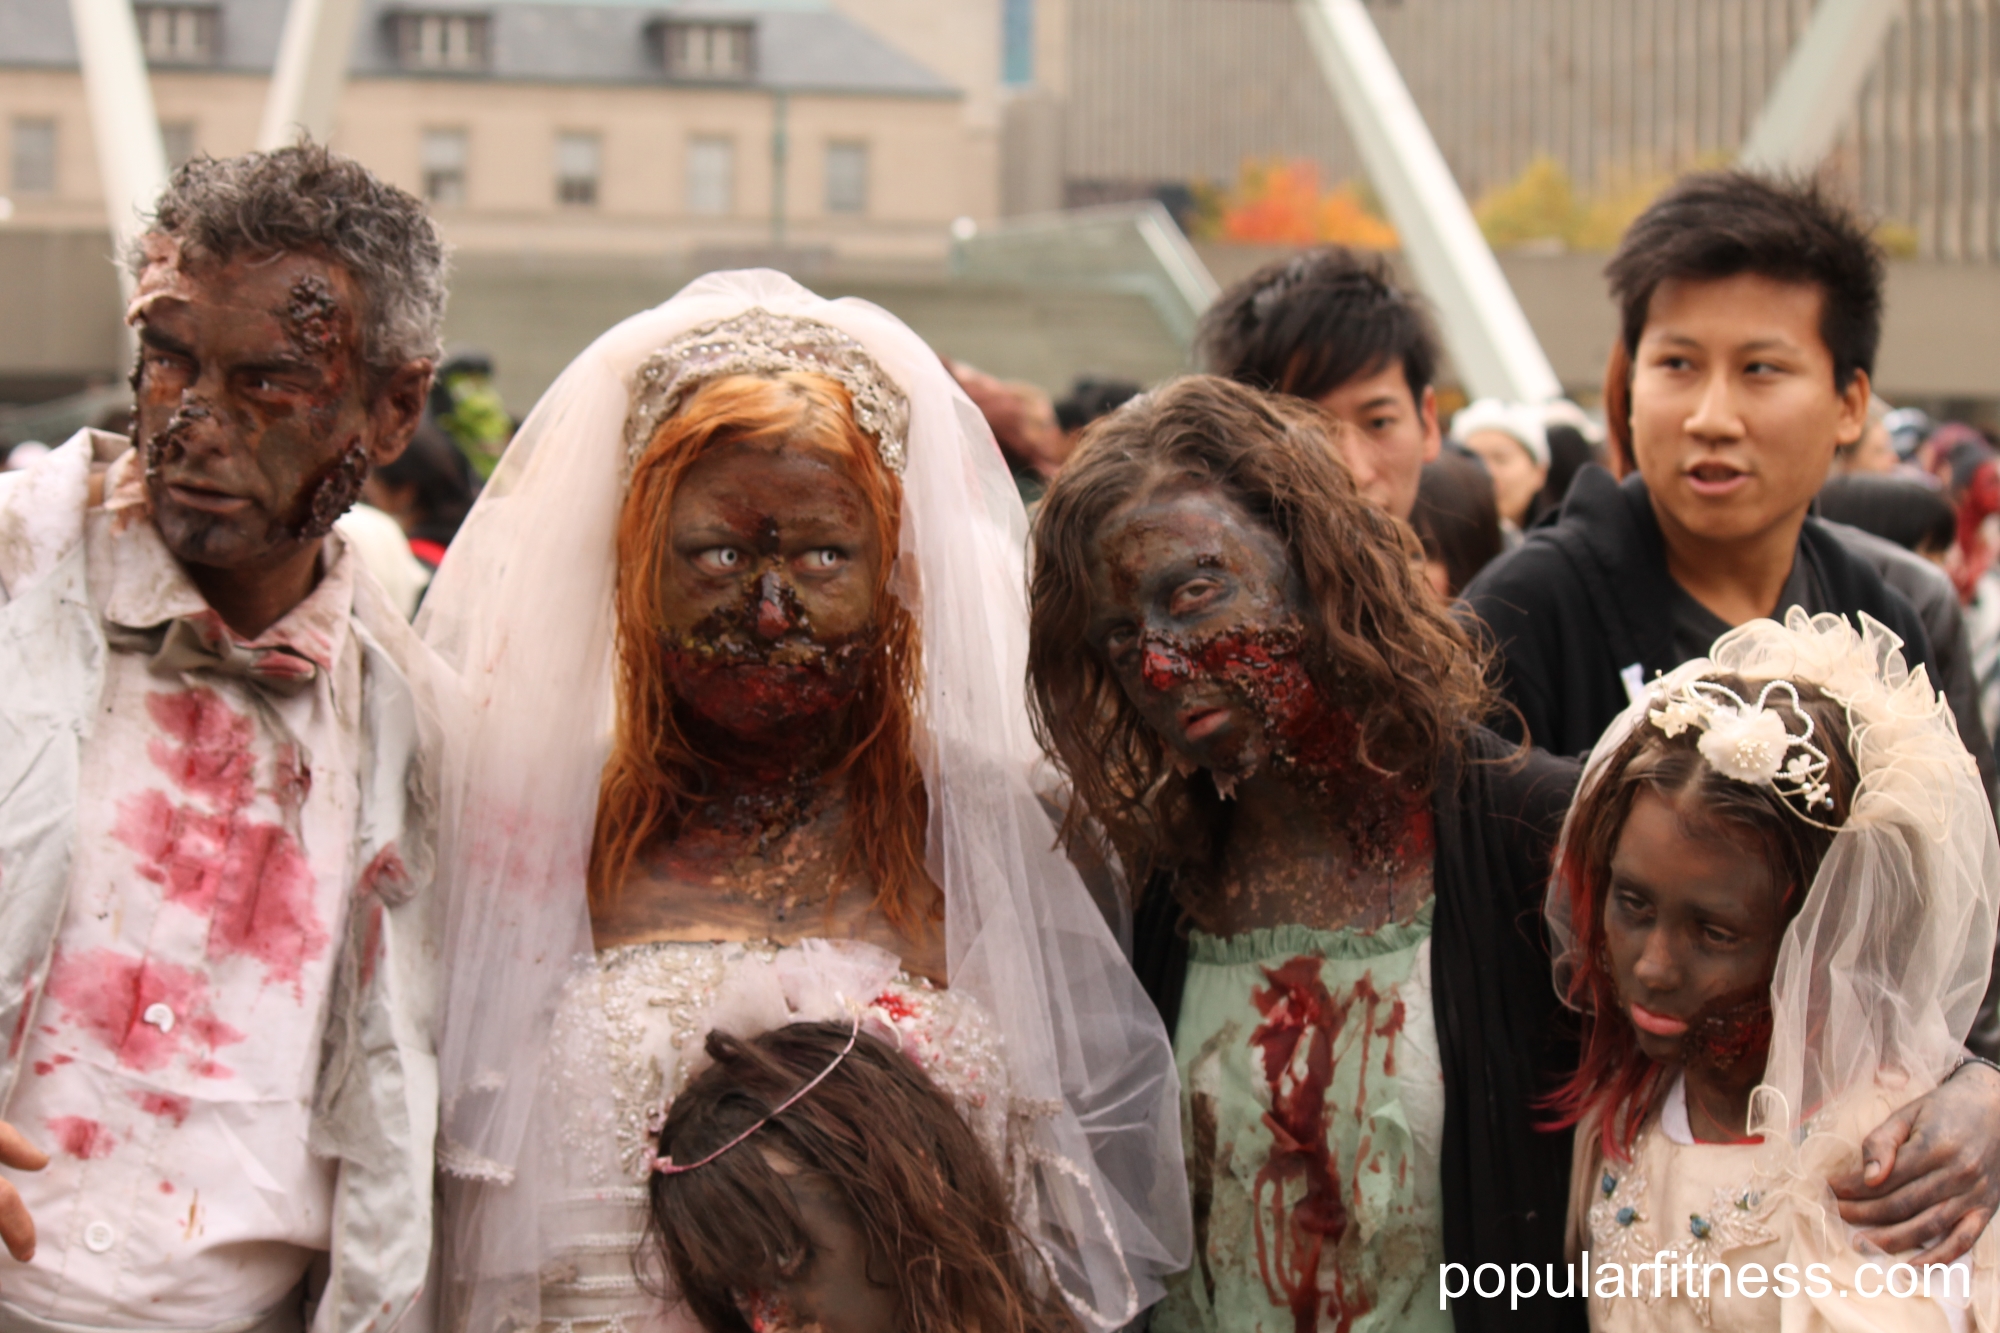 A Zombie family wedding - zombie groom, bride and the zombie kids